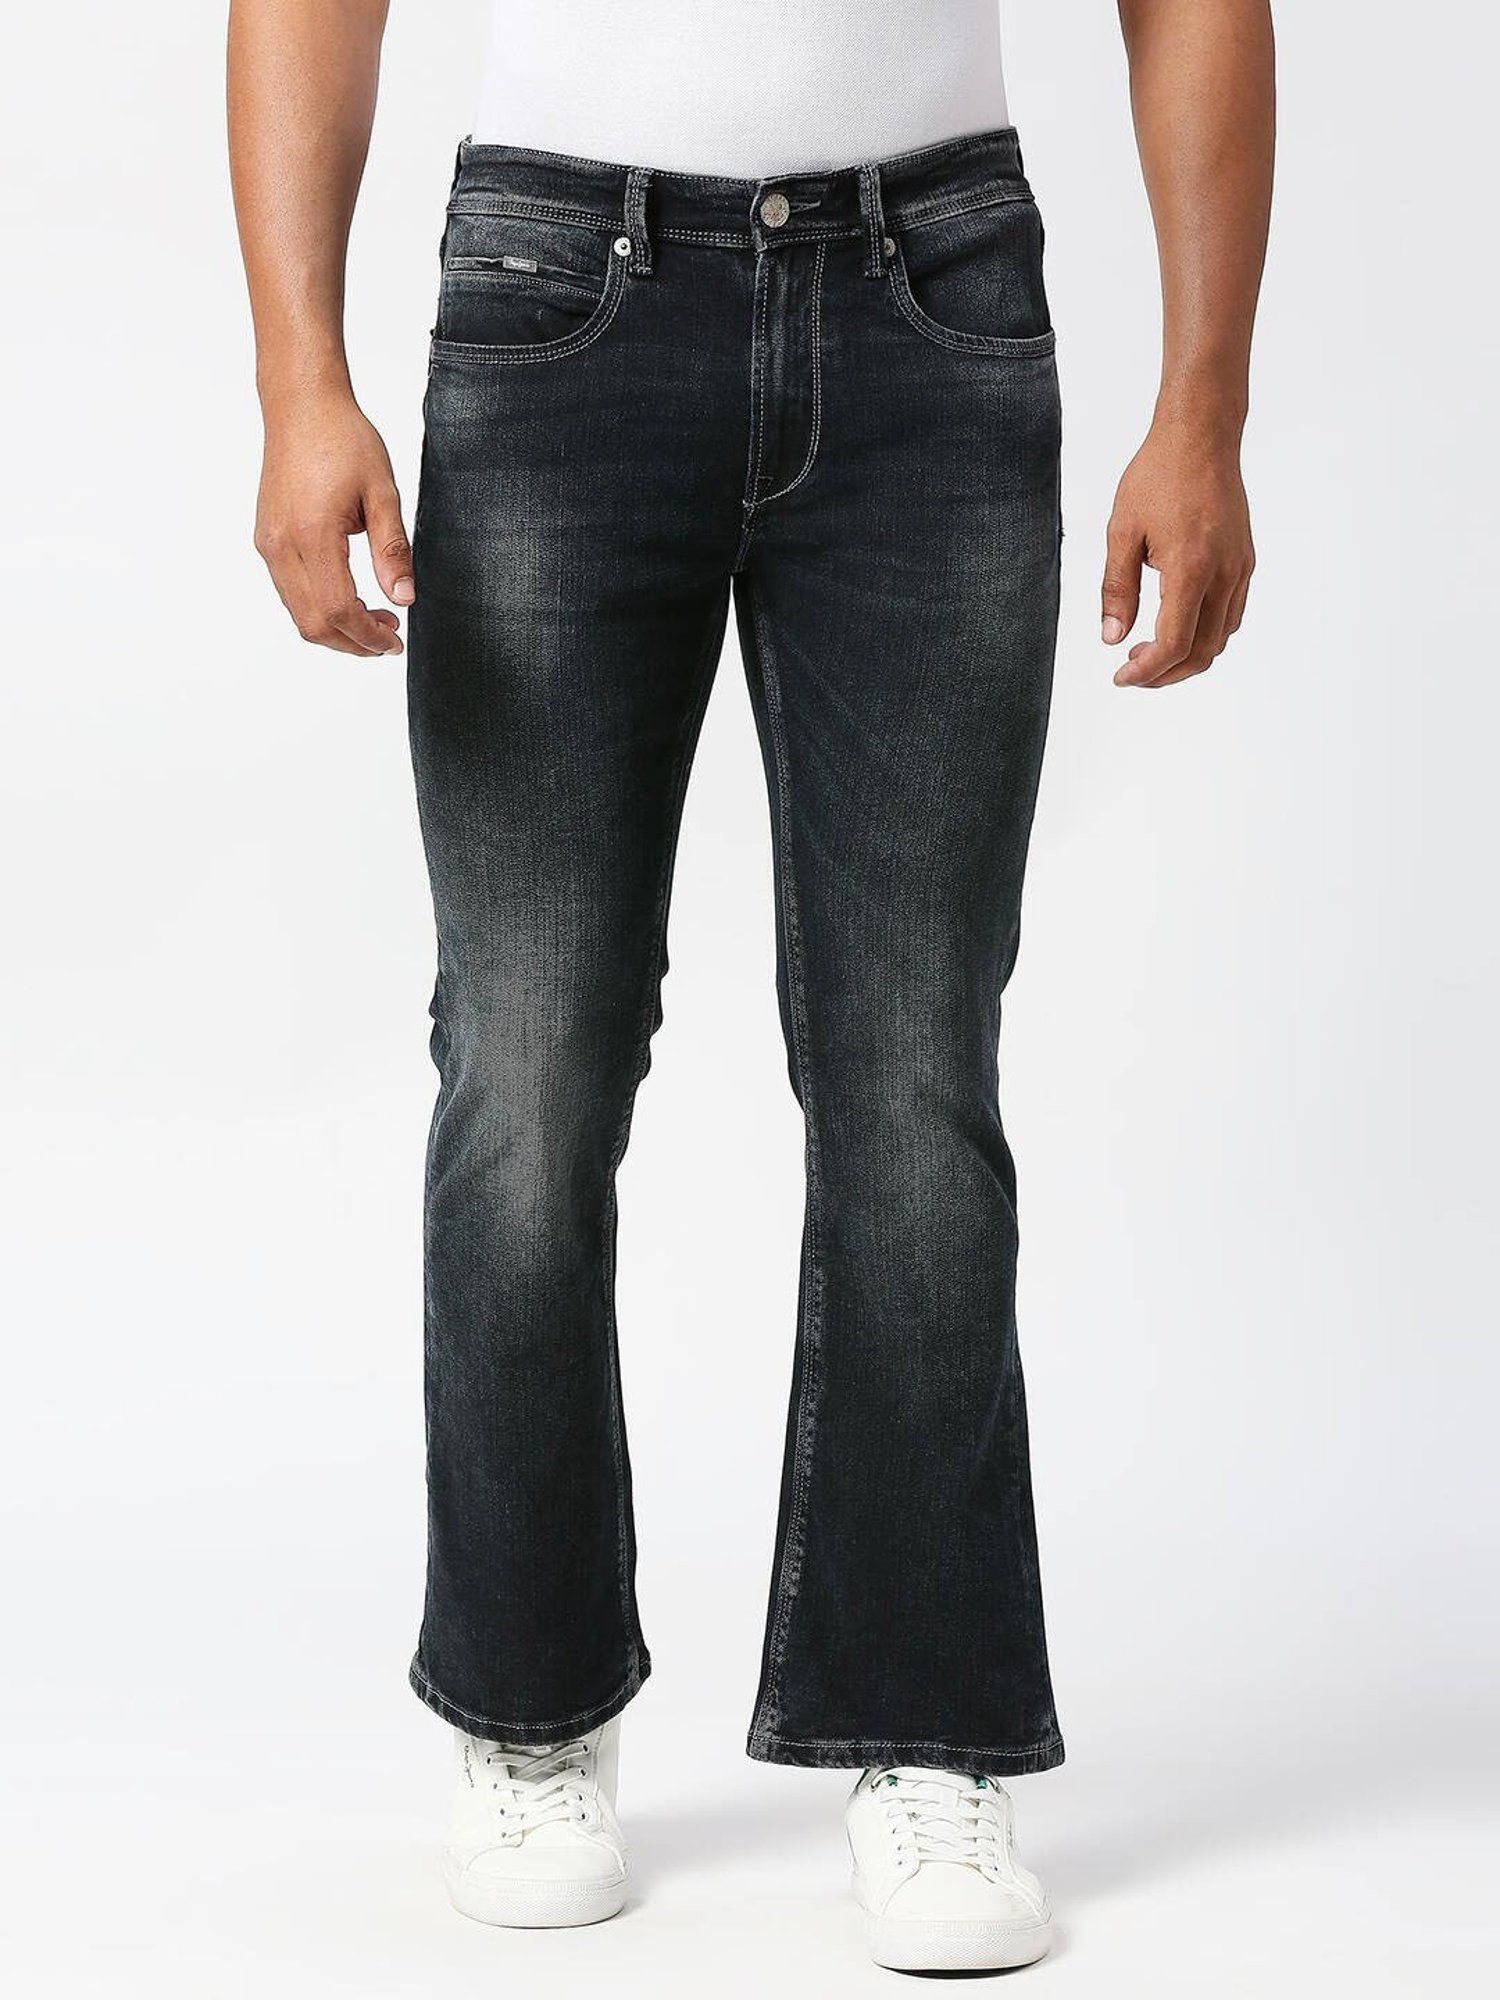 Loose Bootcut Jeans - Denim black - Men | H&M IN